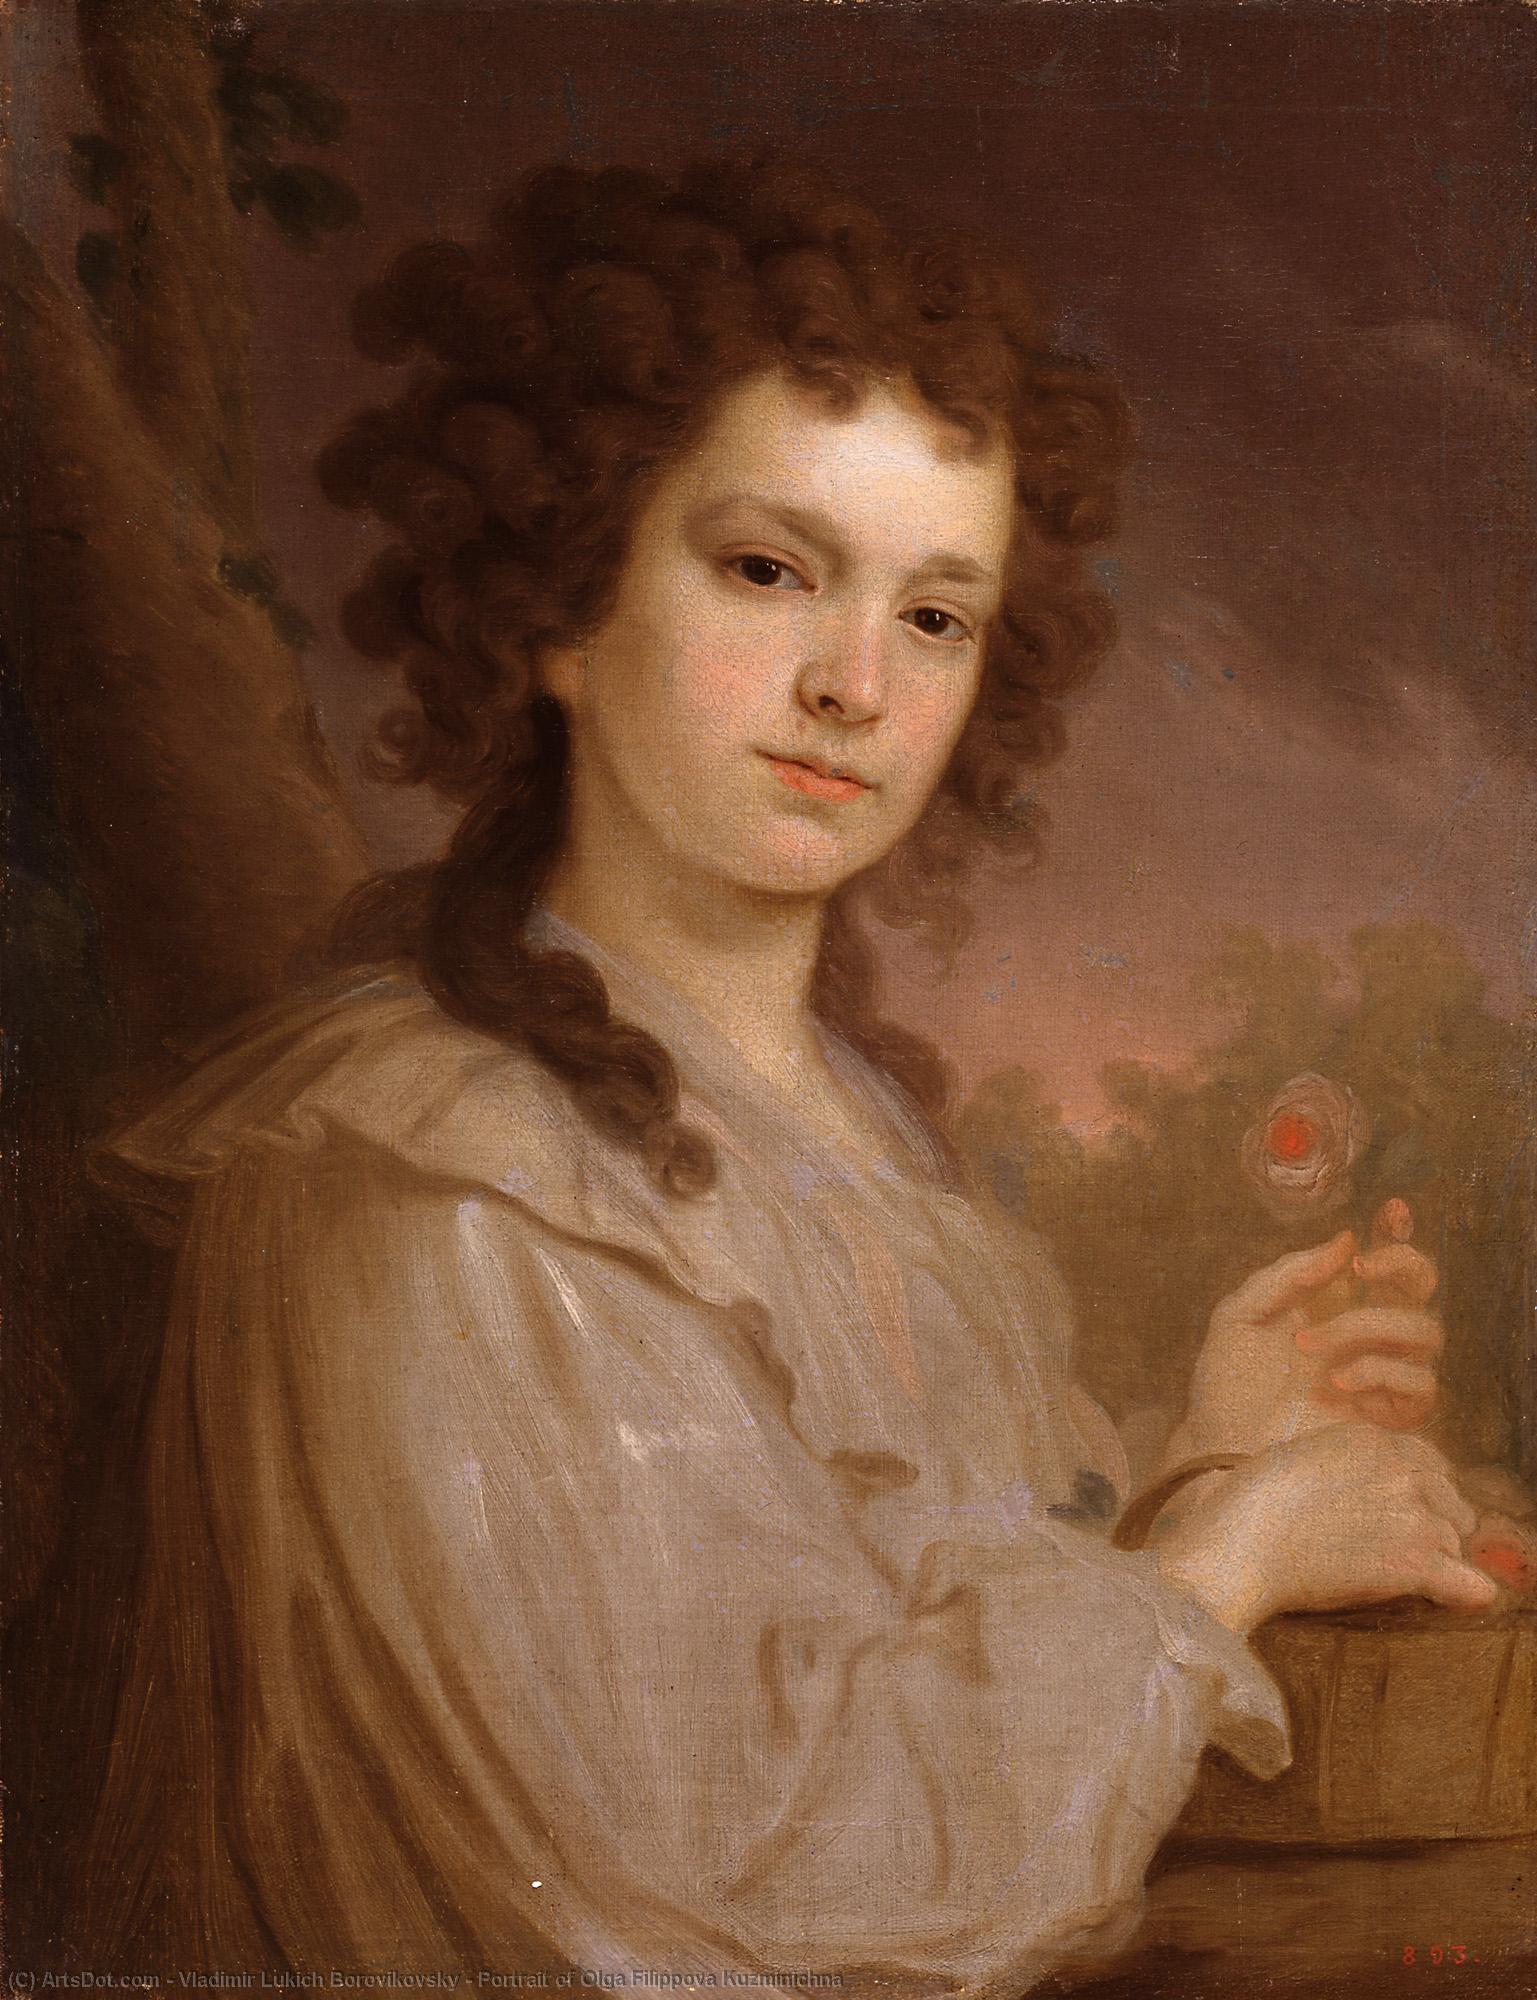 Buy Museum Art Reproductions Portrait of Olga Filippova Kuzminichna by Vladimir Lukich Borovikovsky (1757-1825) | ArtsDot.com